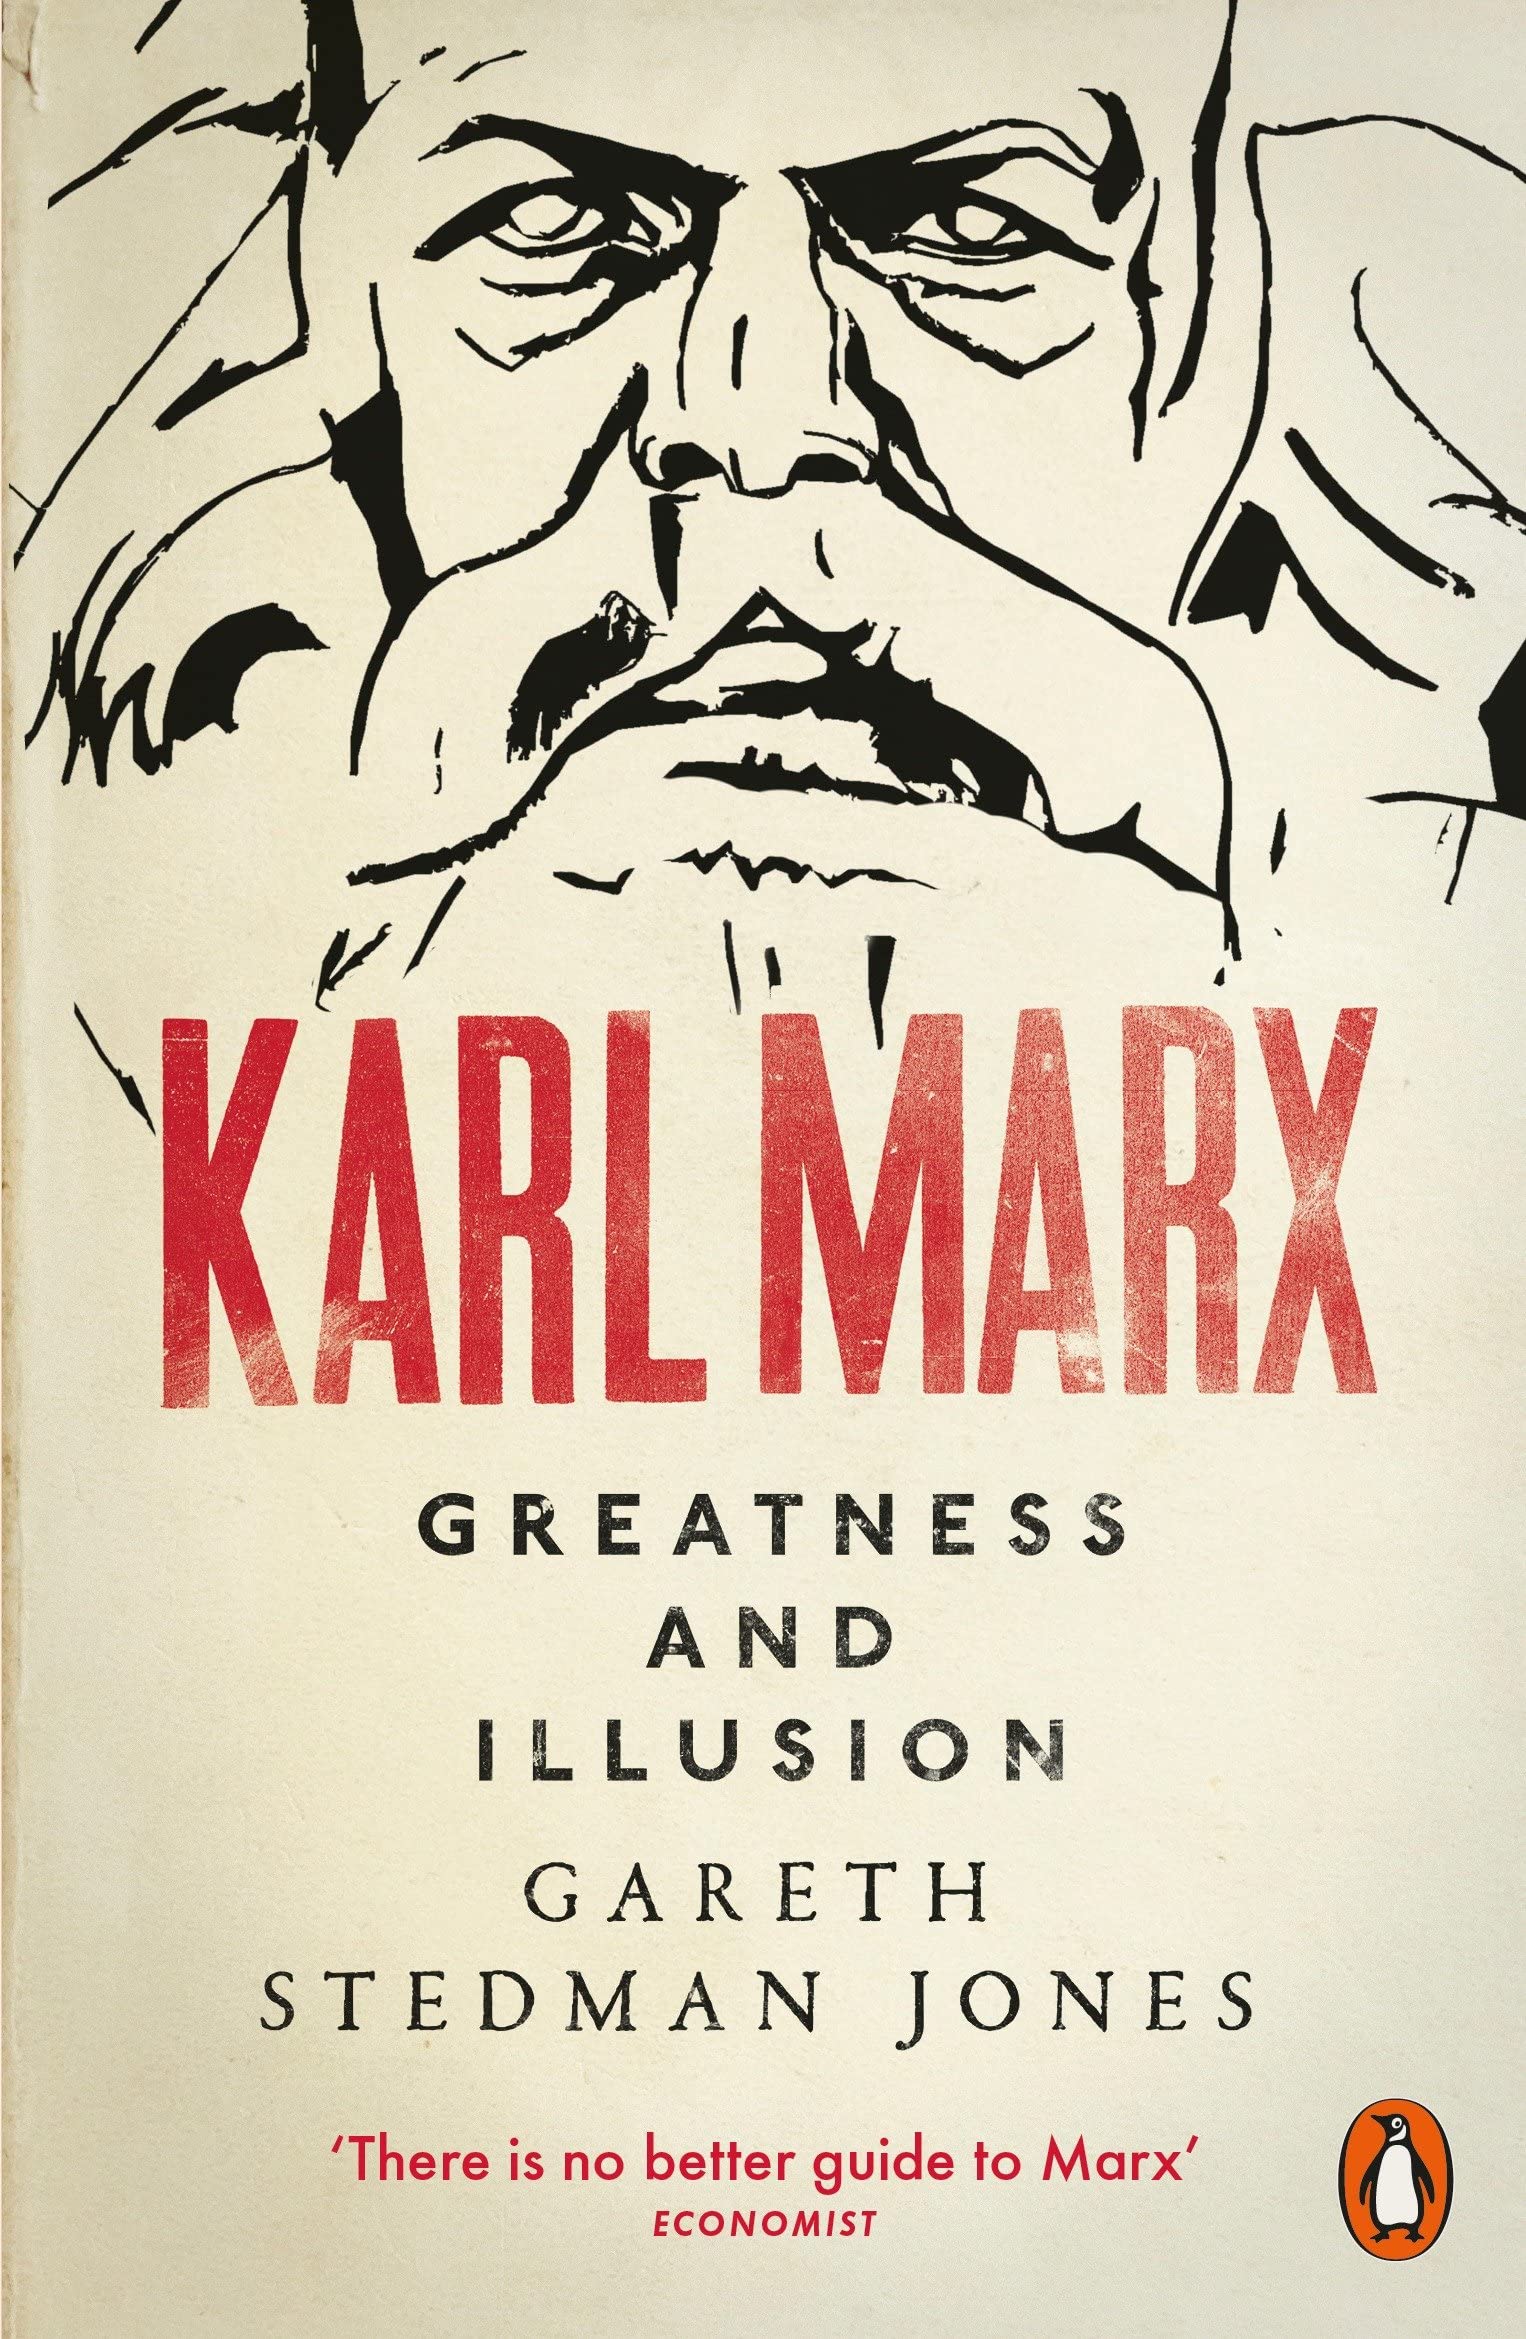 Karl Marx: Greatness and Illusion by Gareth Stedman Jones.